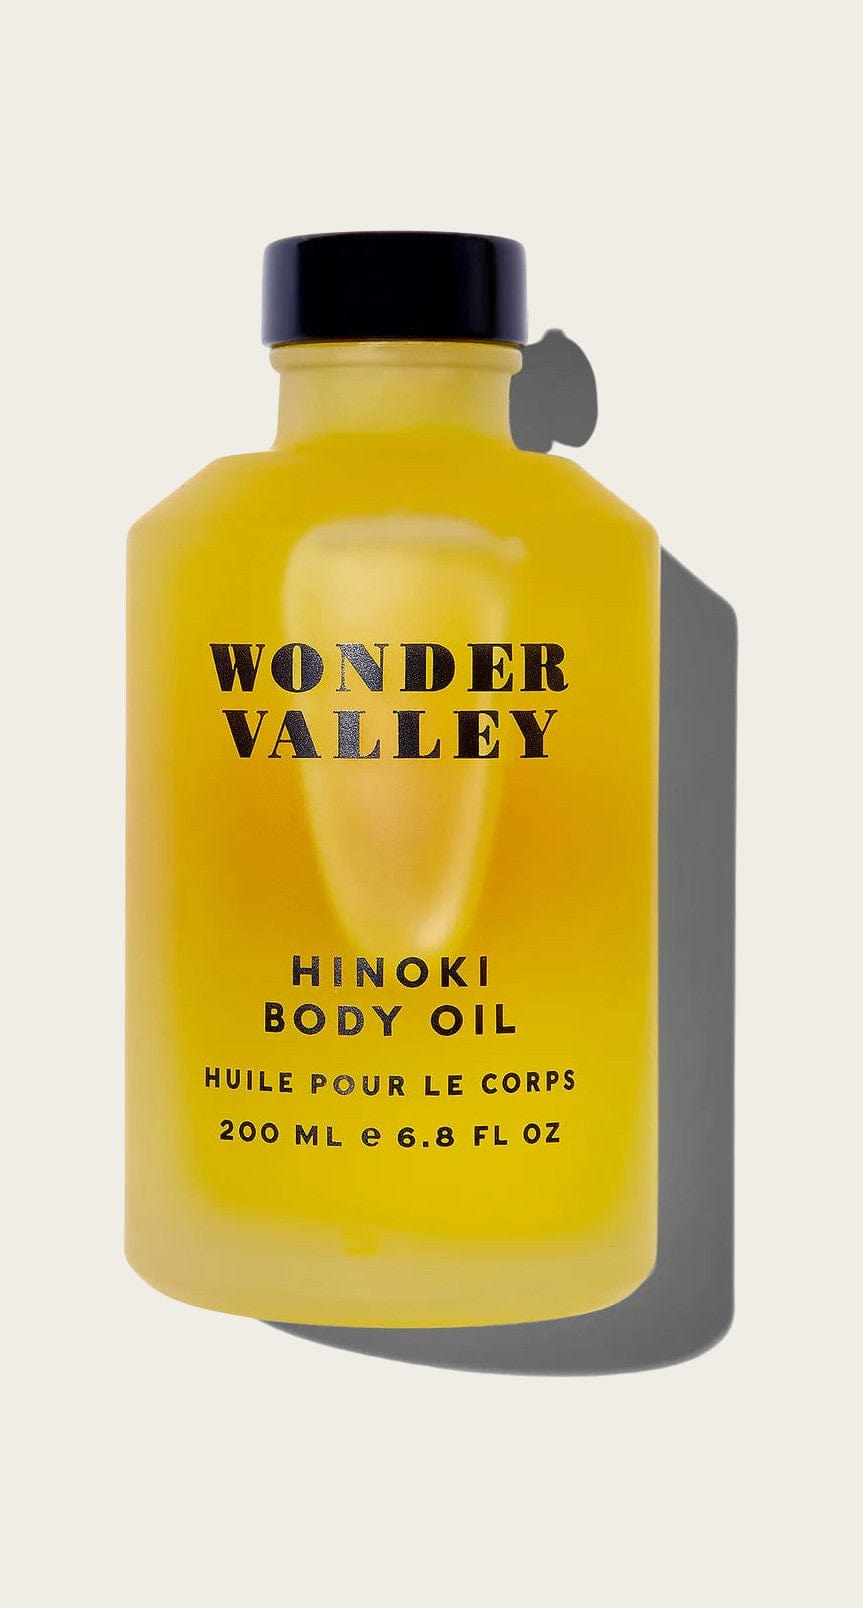 Wonder Valley body oil Hinoki Body Oil sunja link - canada